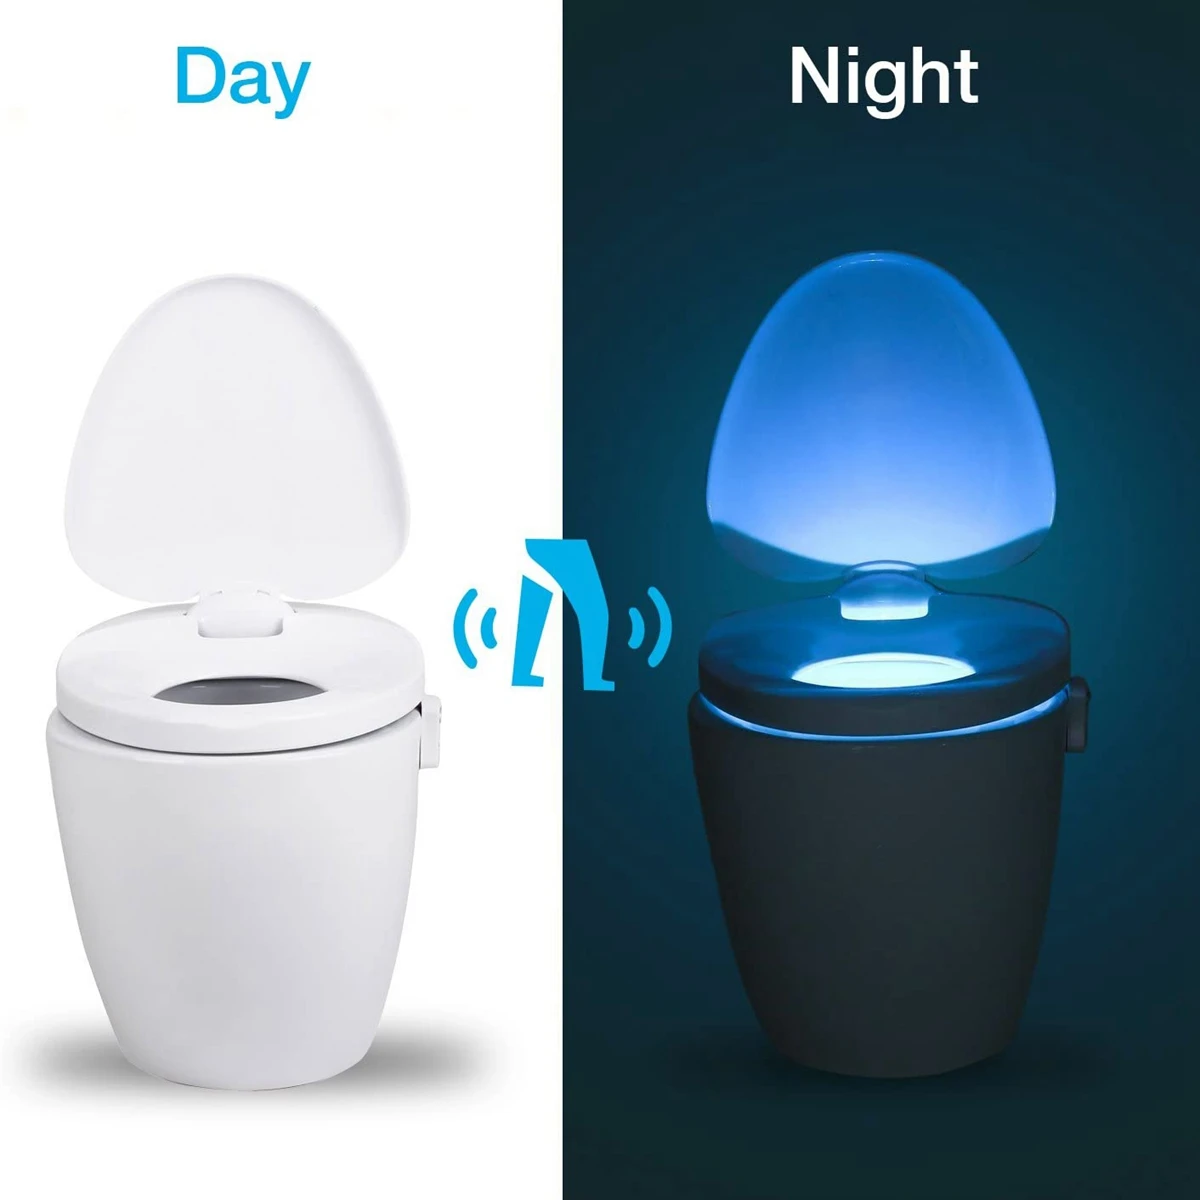 https://ae01.alicdn.com/kf/U9b3237c33e804b6a83382834c5ad02aas/Smart-PIR-Motion-Sensor-Toilet-Seat-Night-Light-Waterproof-8-Colors-Night-Lamp-For-Toilet-Bowl.jpg